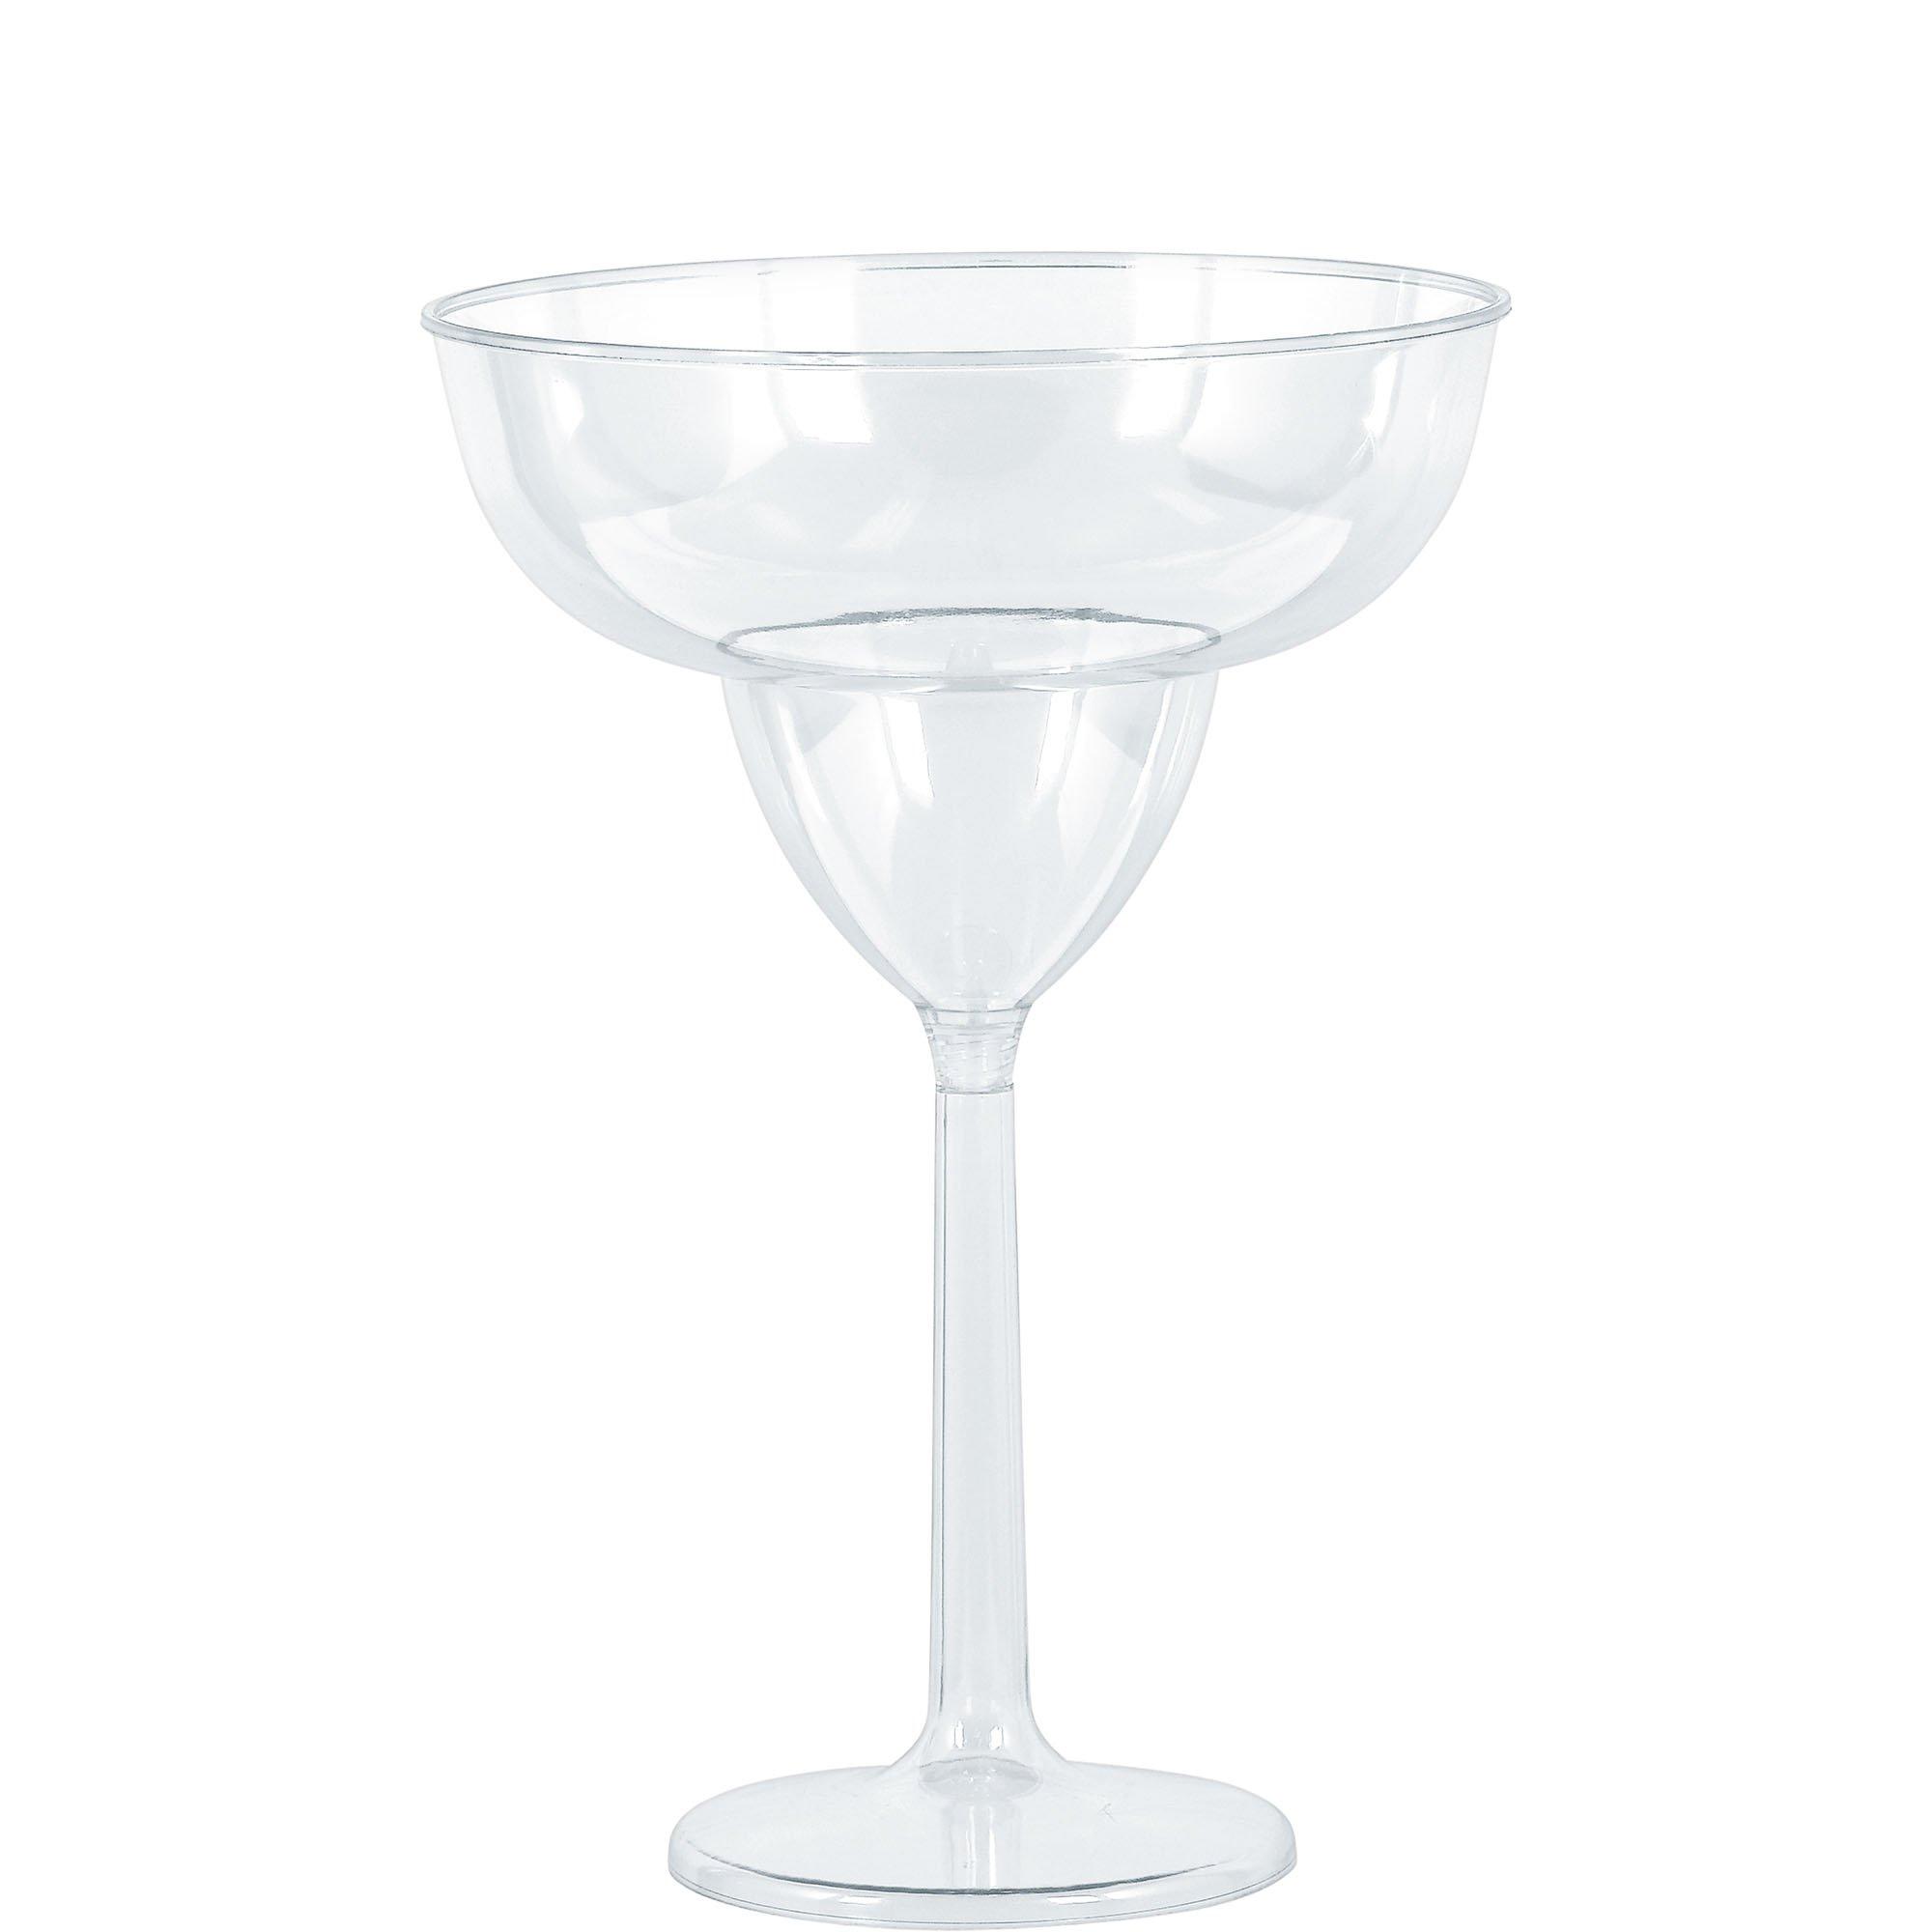 Jumbo Clear Plastic Margarita Glasses, 30oz, 4ct